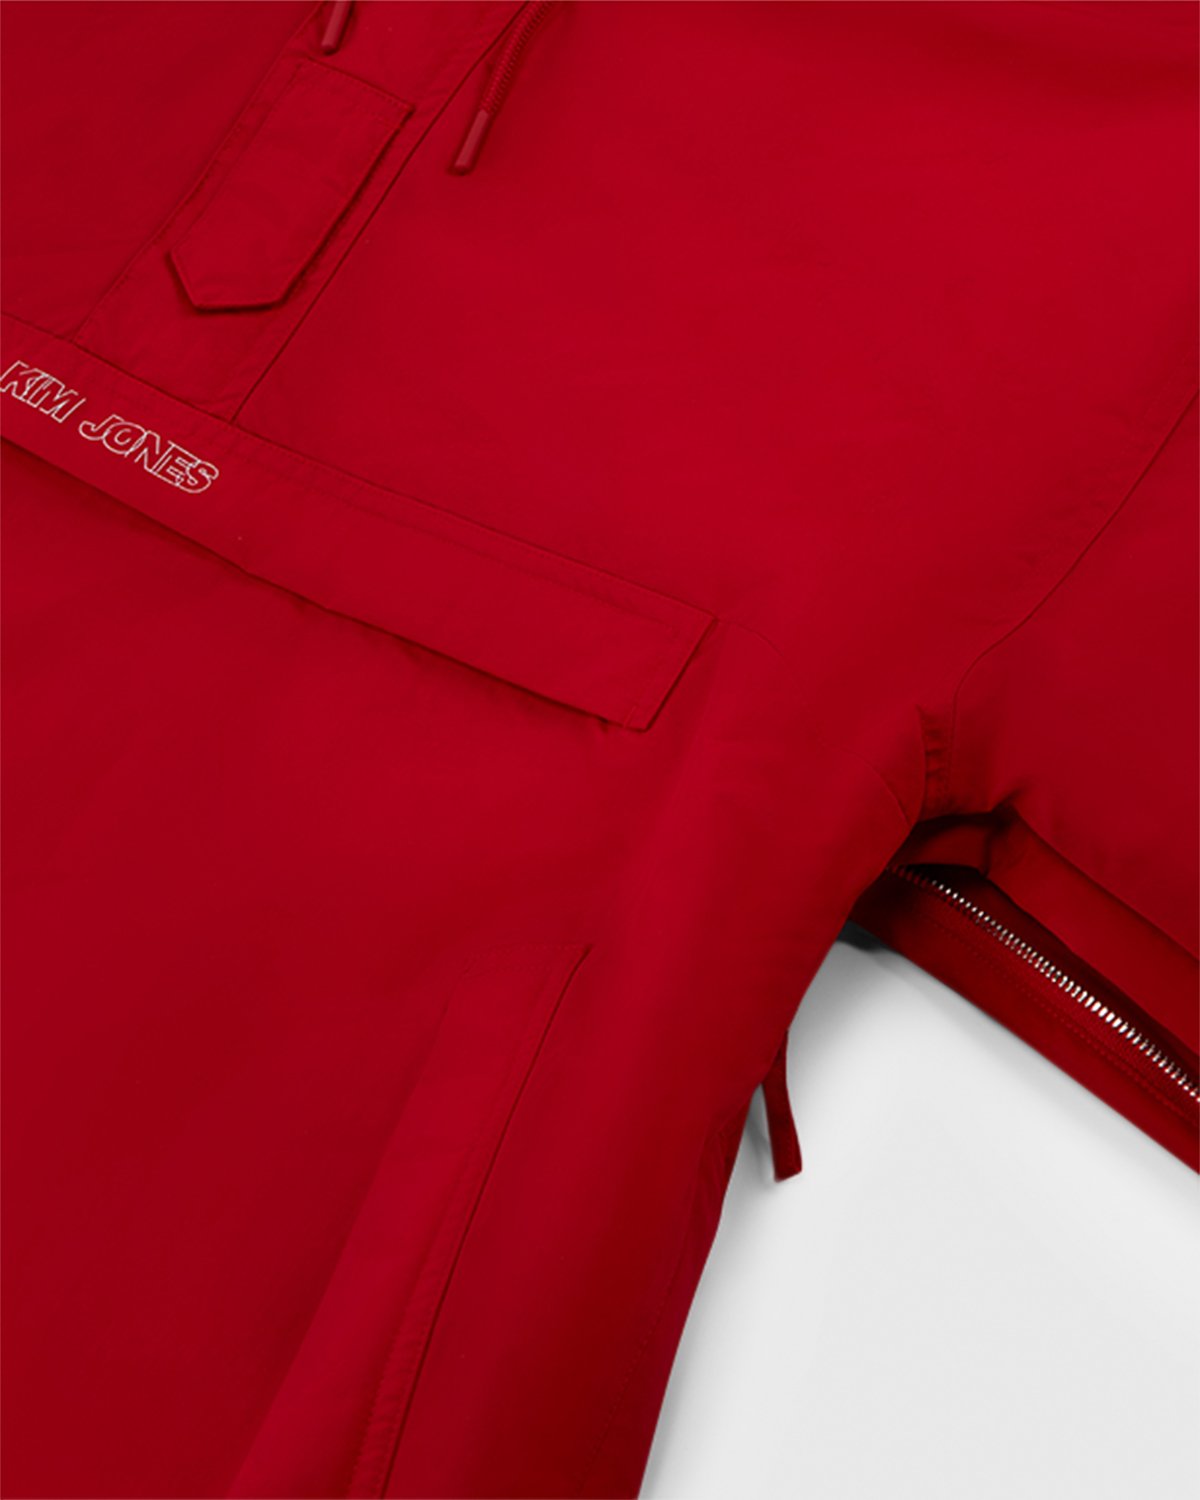 Converse x Kim Jones - Parka Enamel Red - Clothing - Red - Image 4